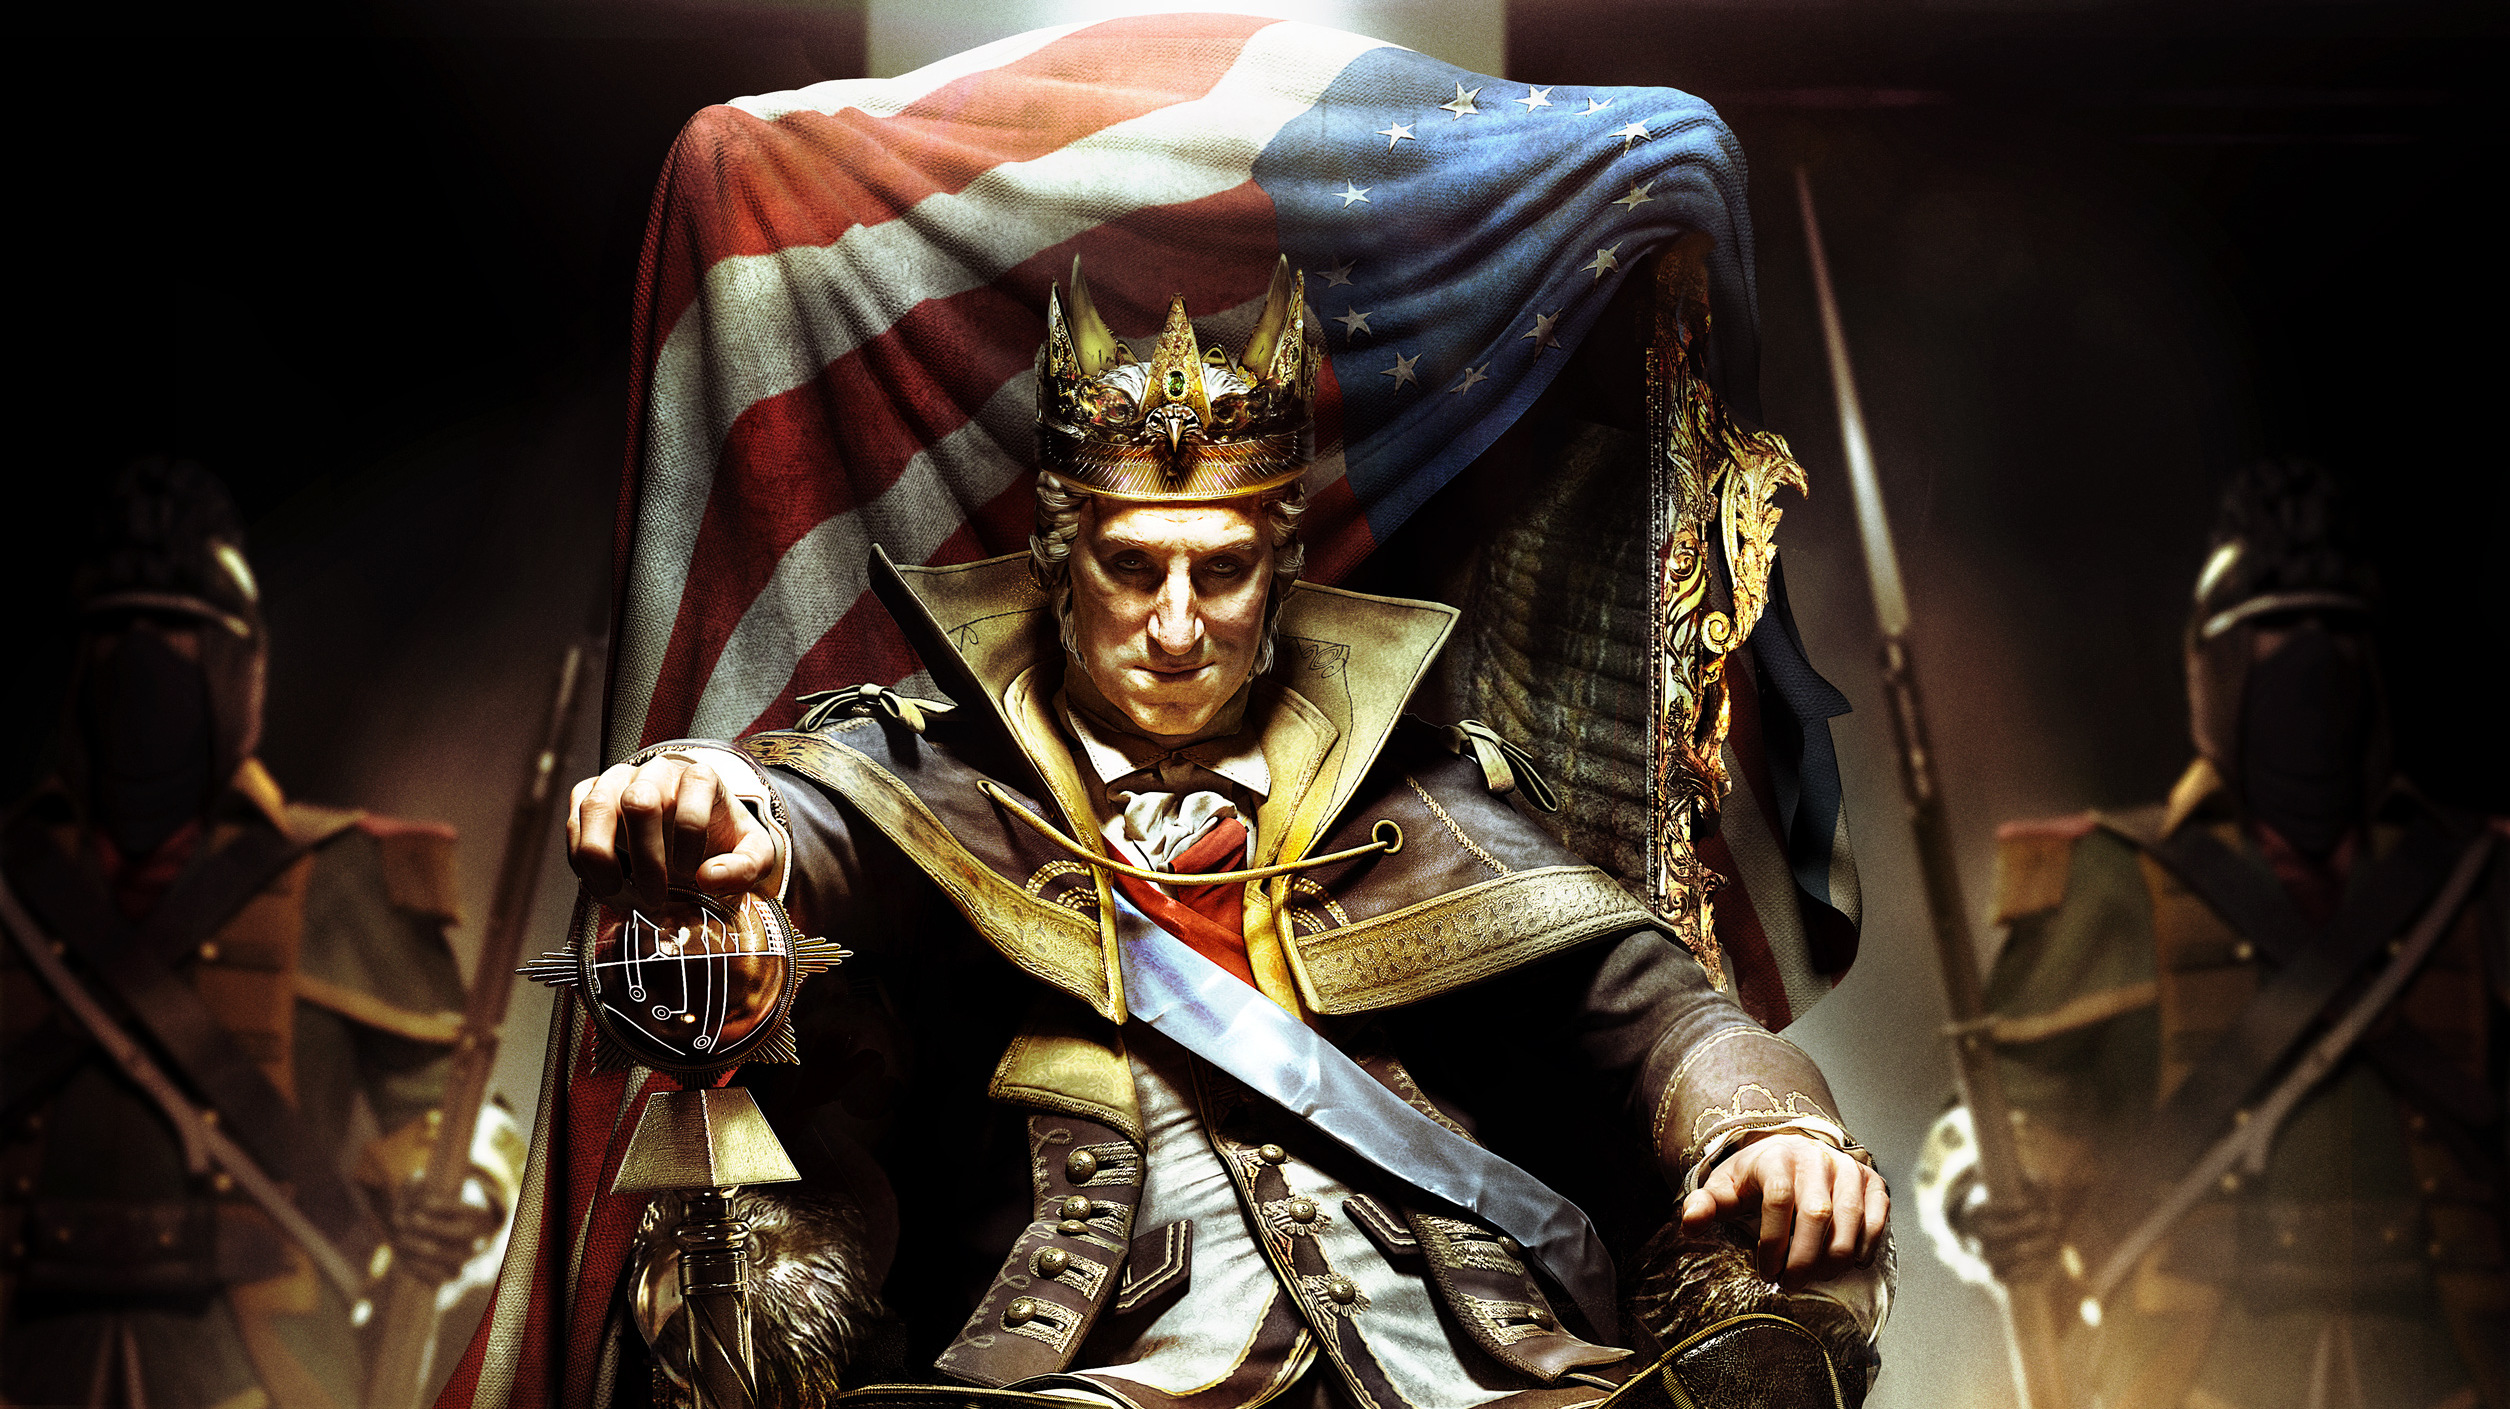 Assassin’s Creed III – The Tyranny of King Washington DLC fact sheet